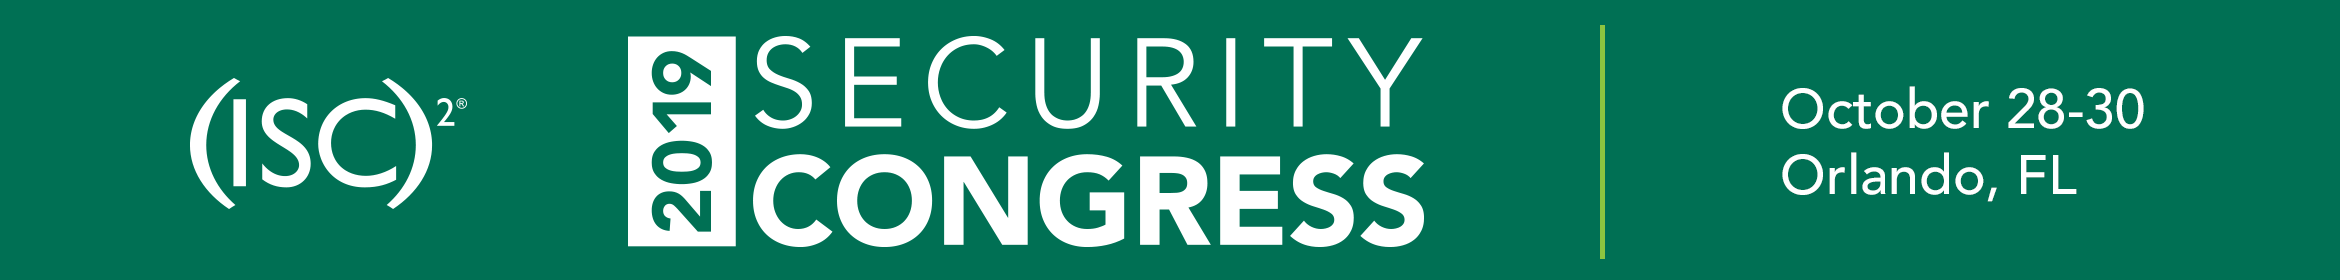 (ISC)² 2019 Security Congress Main banner